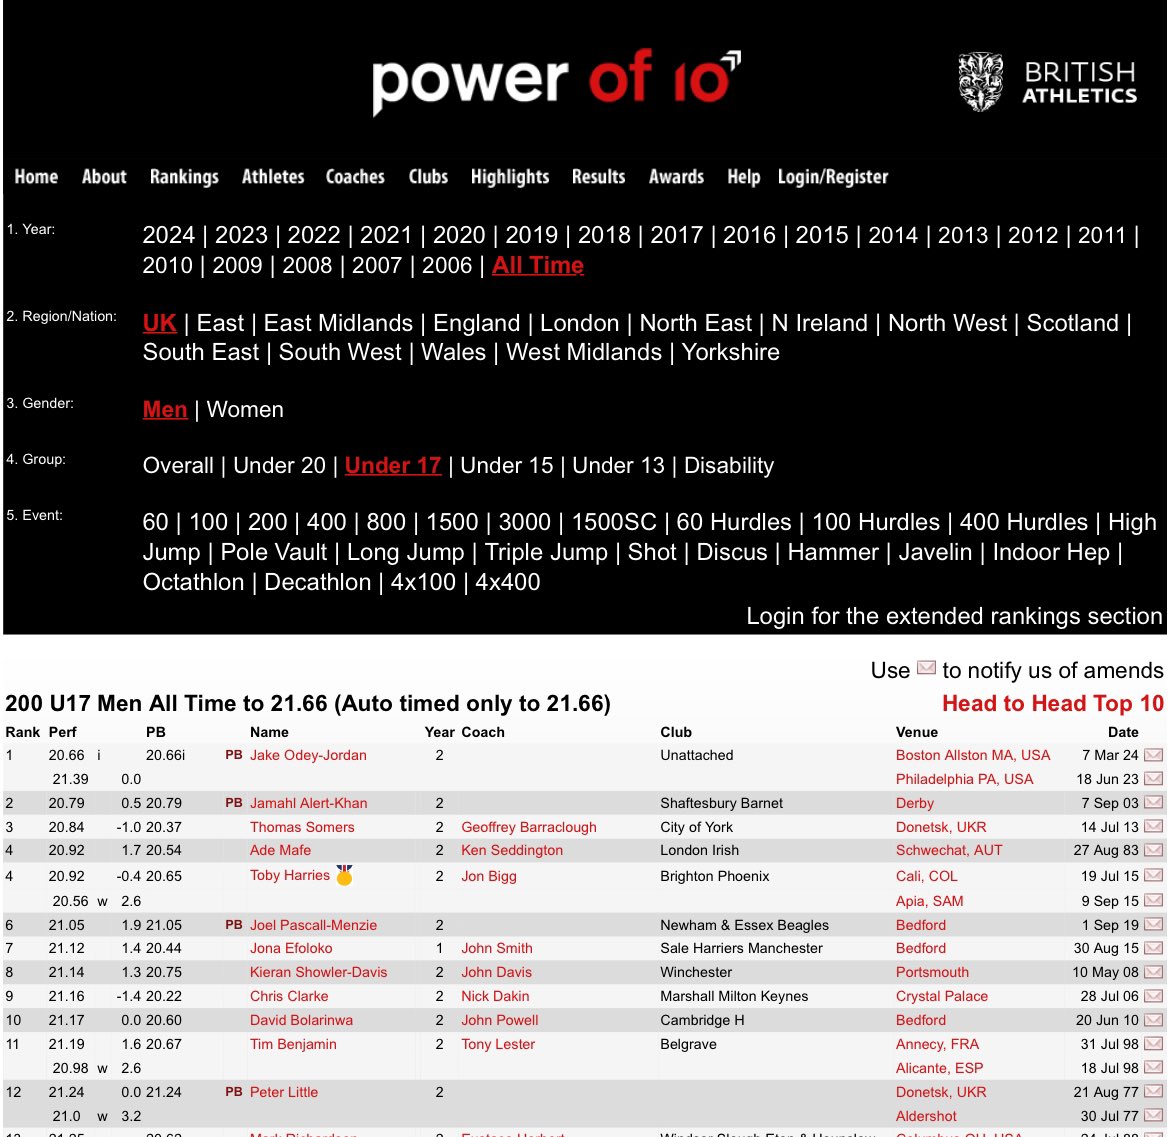 @FitzDunk @BritAthletics Already updated on powerof10 💪